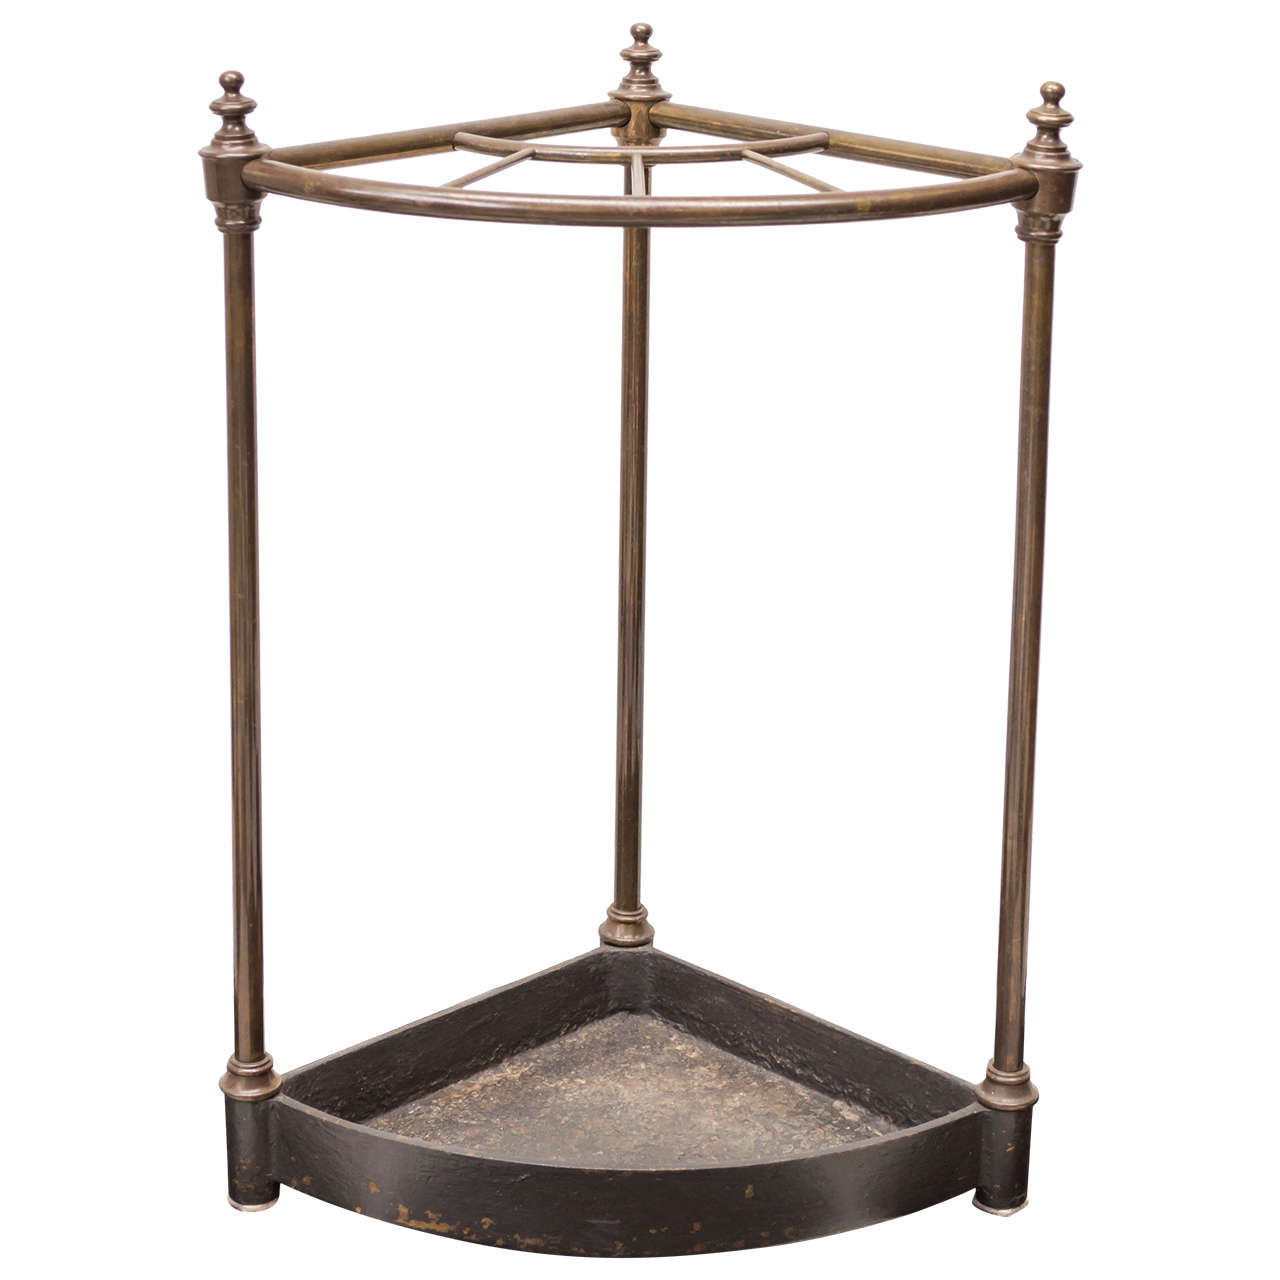 Late 19th Century English Brass and Cast Iron Corner Umbrella Stand